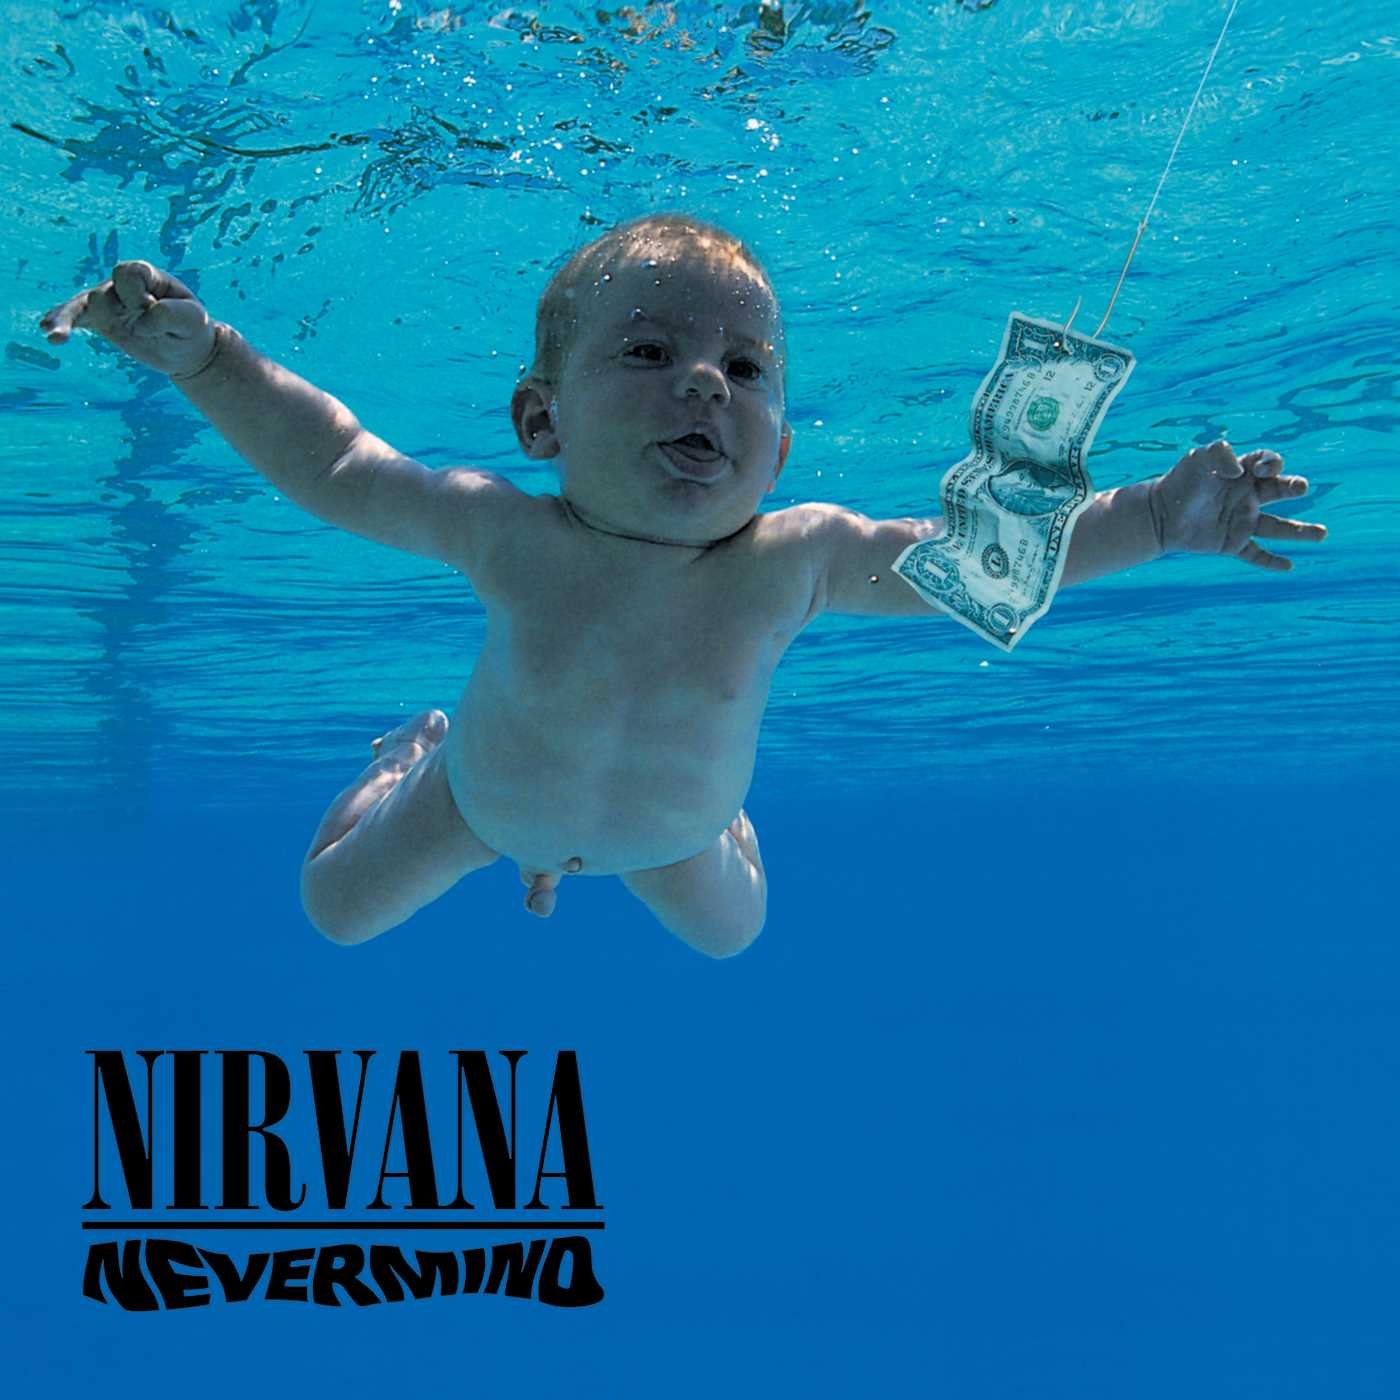 Nirvana "Nevermind" CD